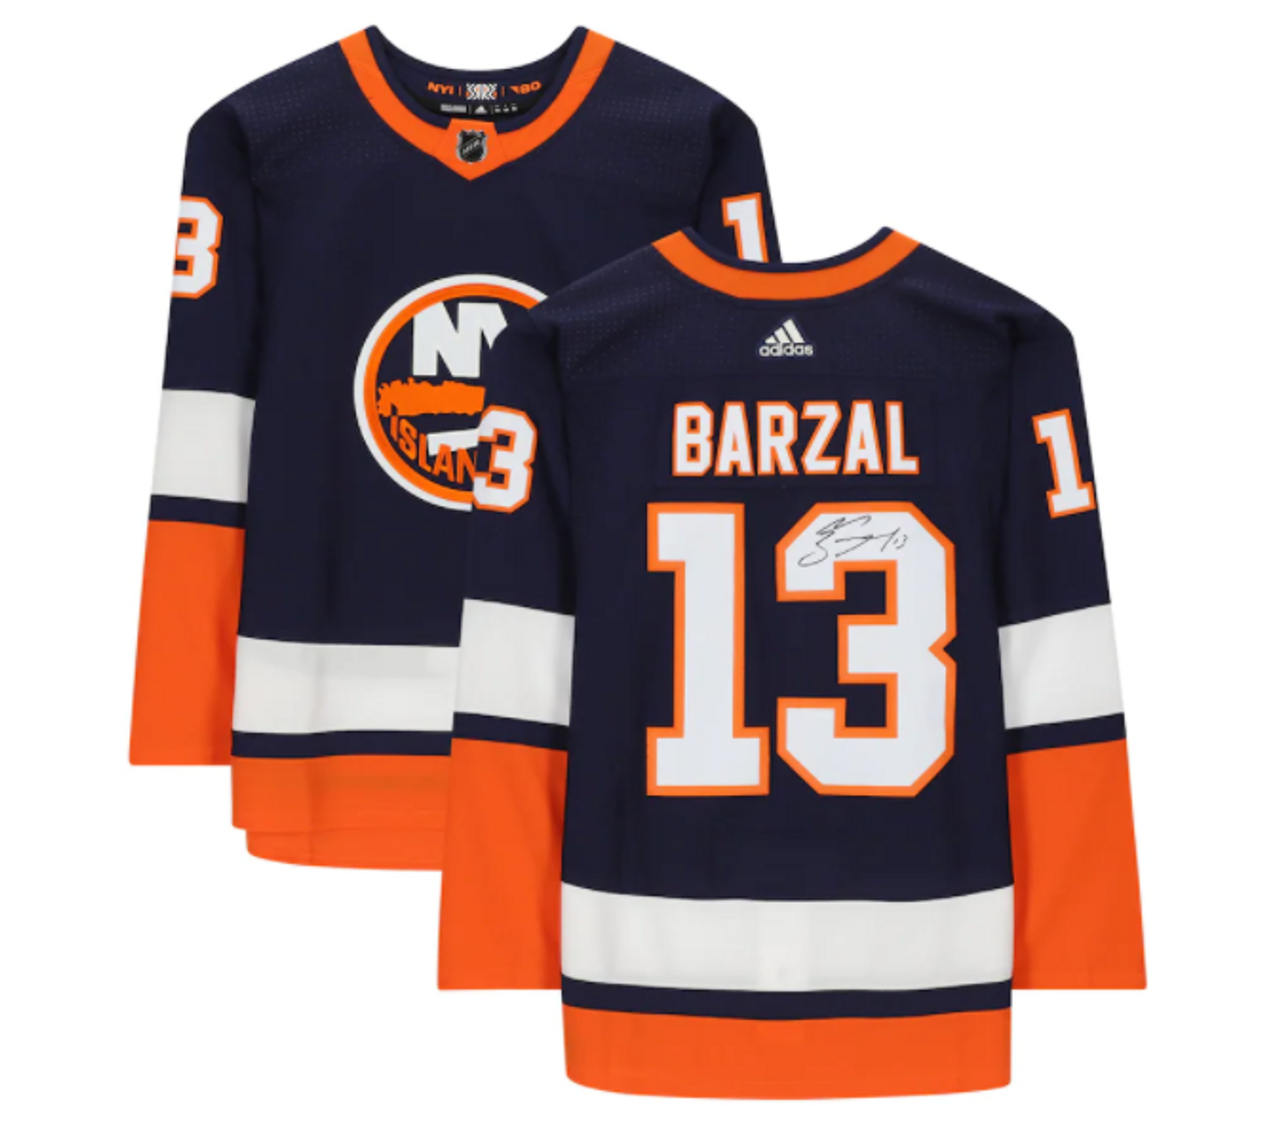 Barzal's impact jerseys